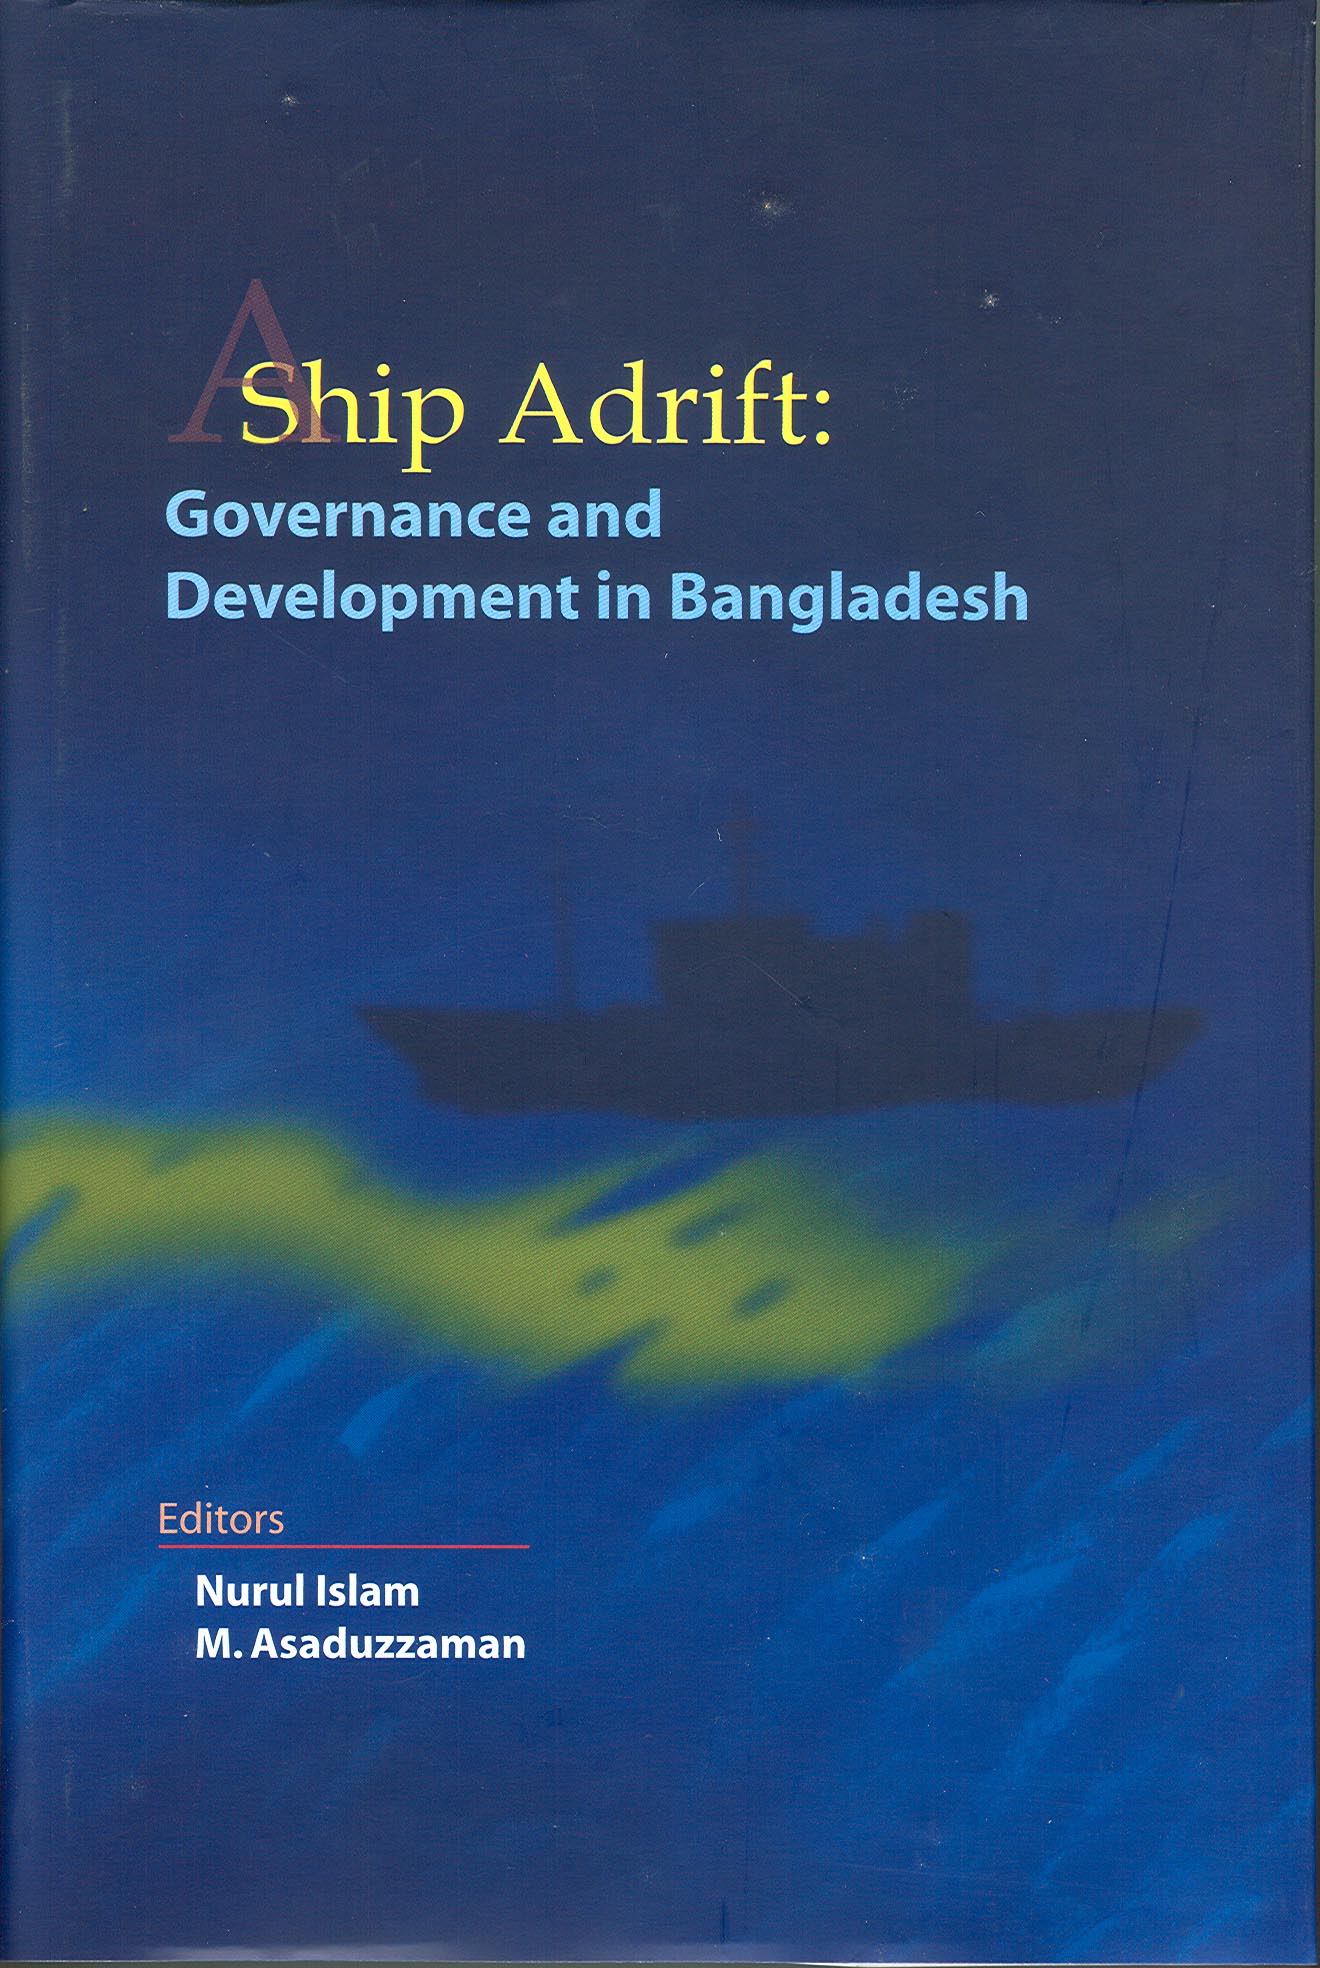 A Ship Adrift: Governance and Development in Bangladesh